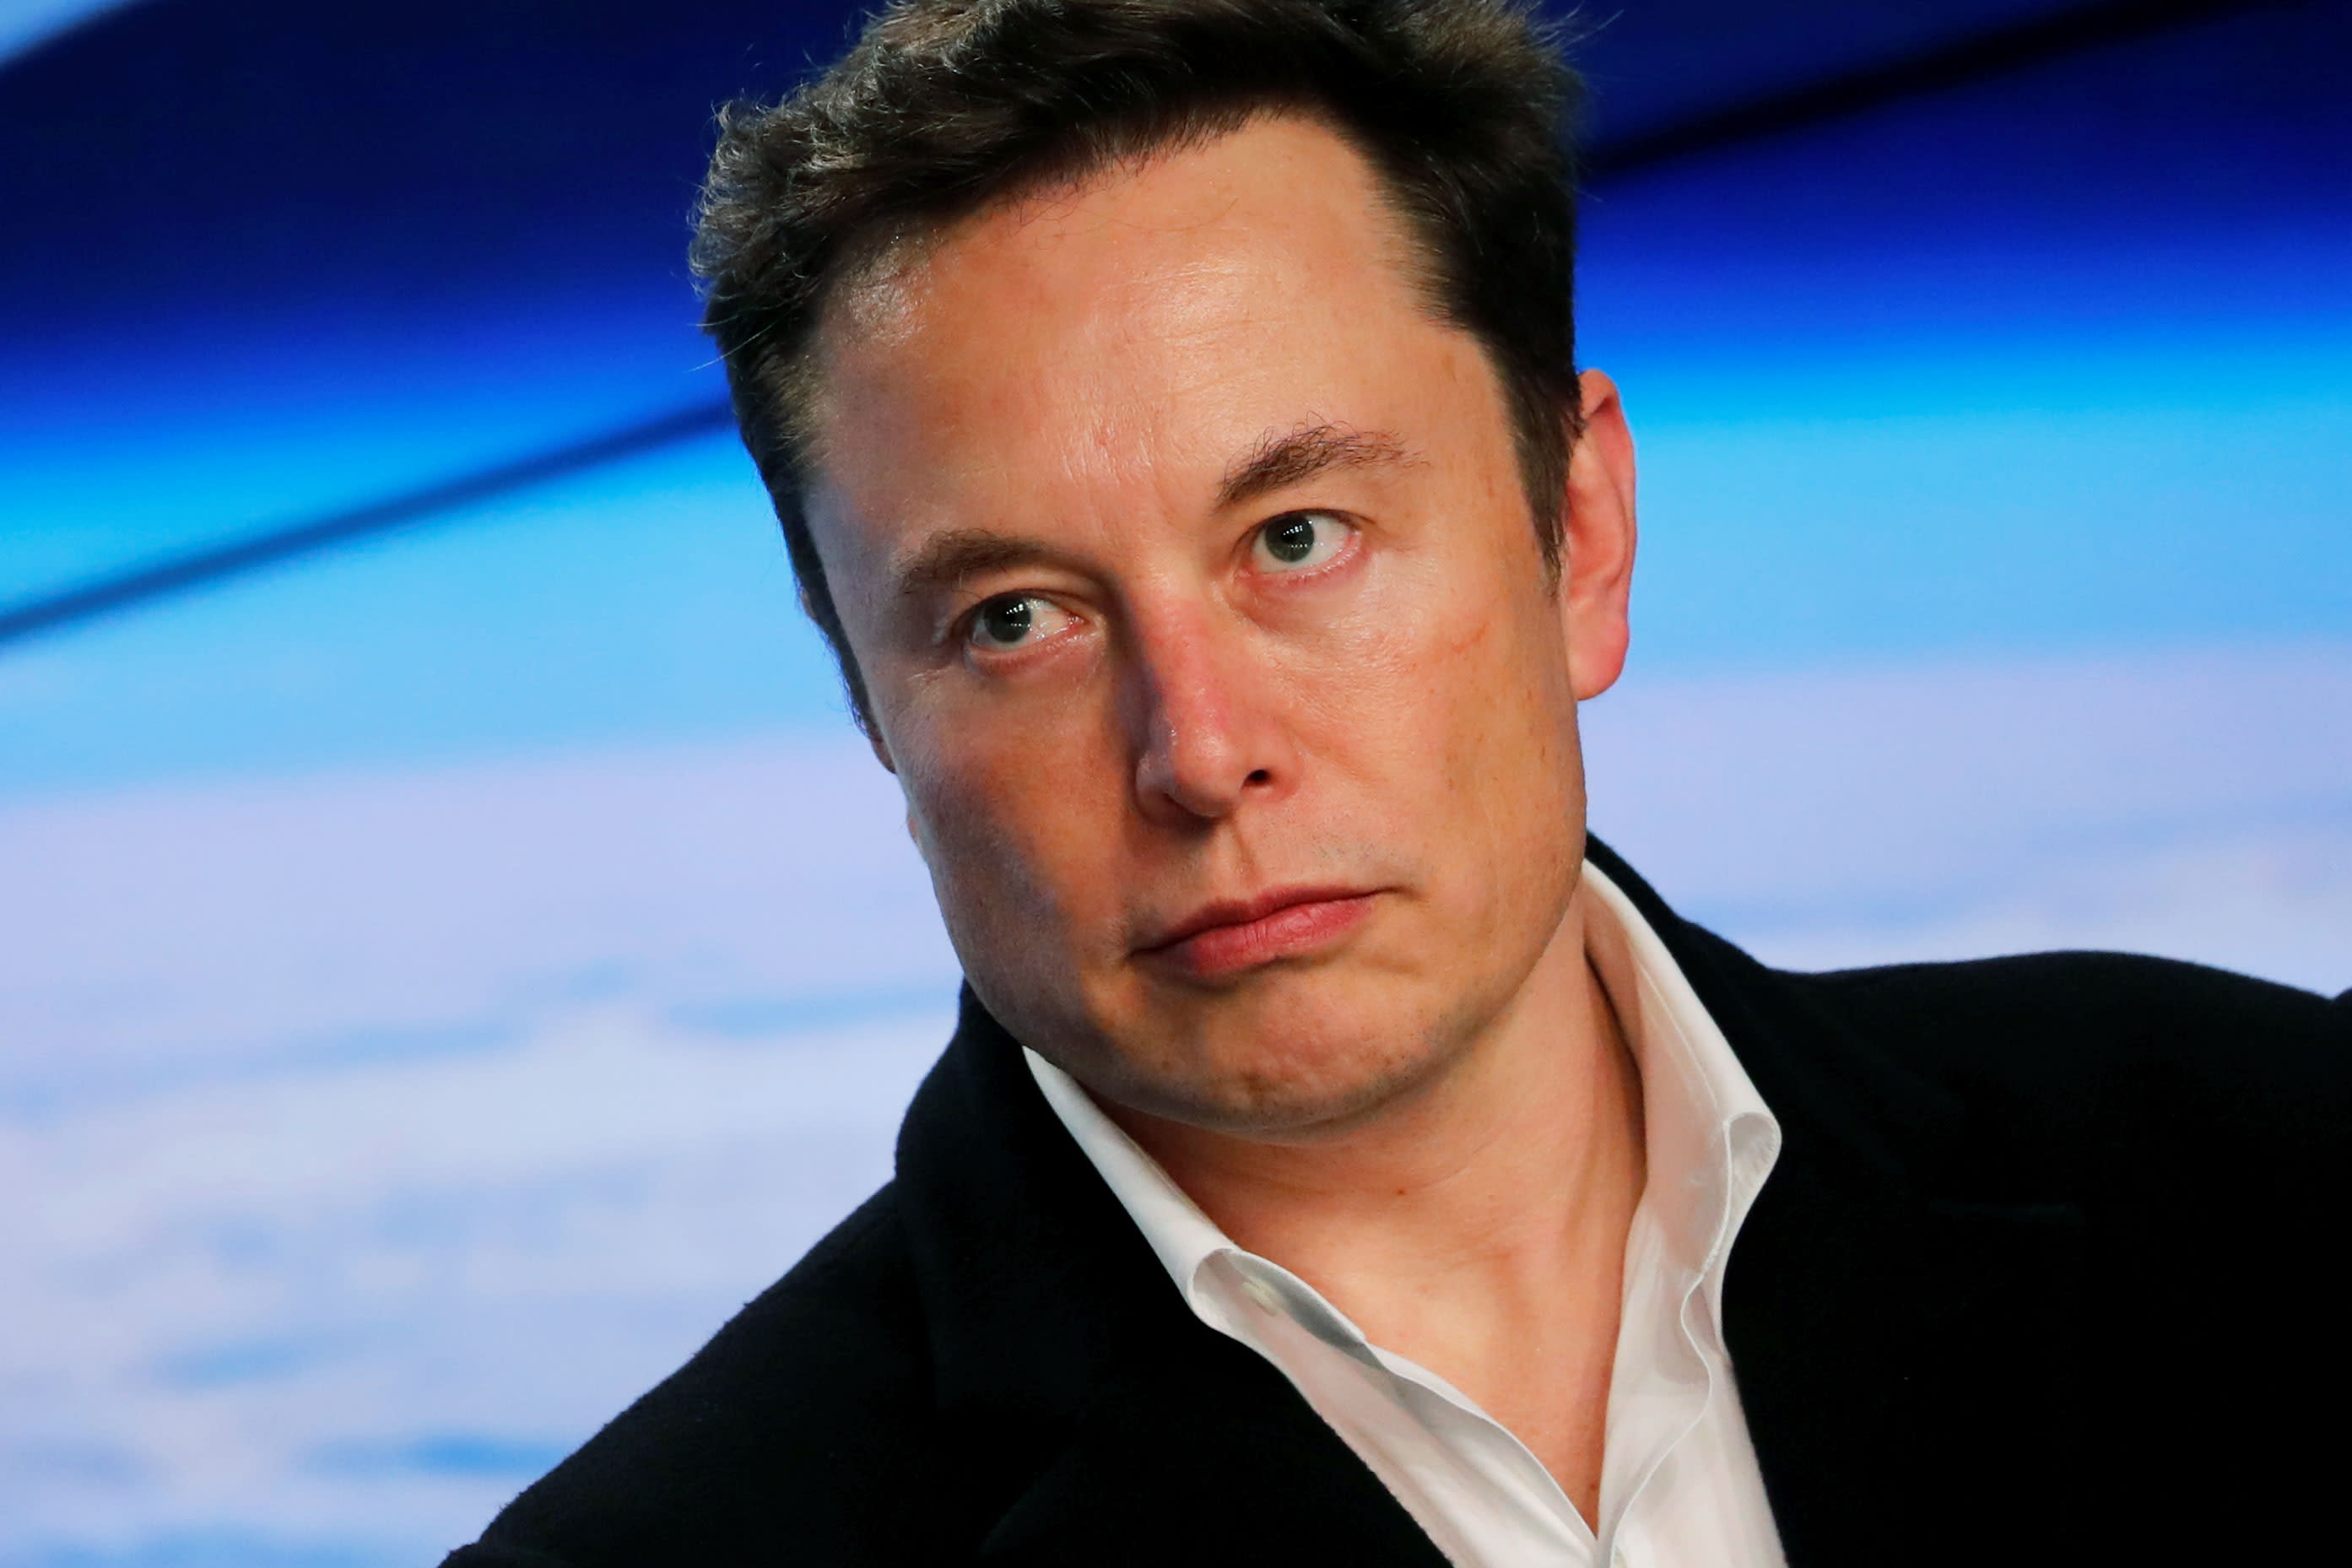 Elon Musk's F-bomb rant against lockdowns reflects 'growing sentiment,' says Dr. Scott Gottlieb - CNBC